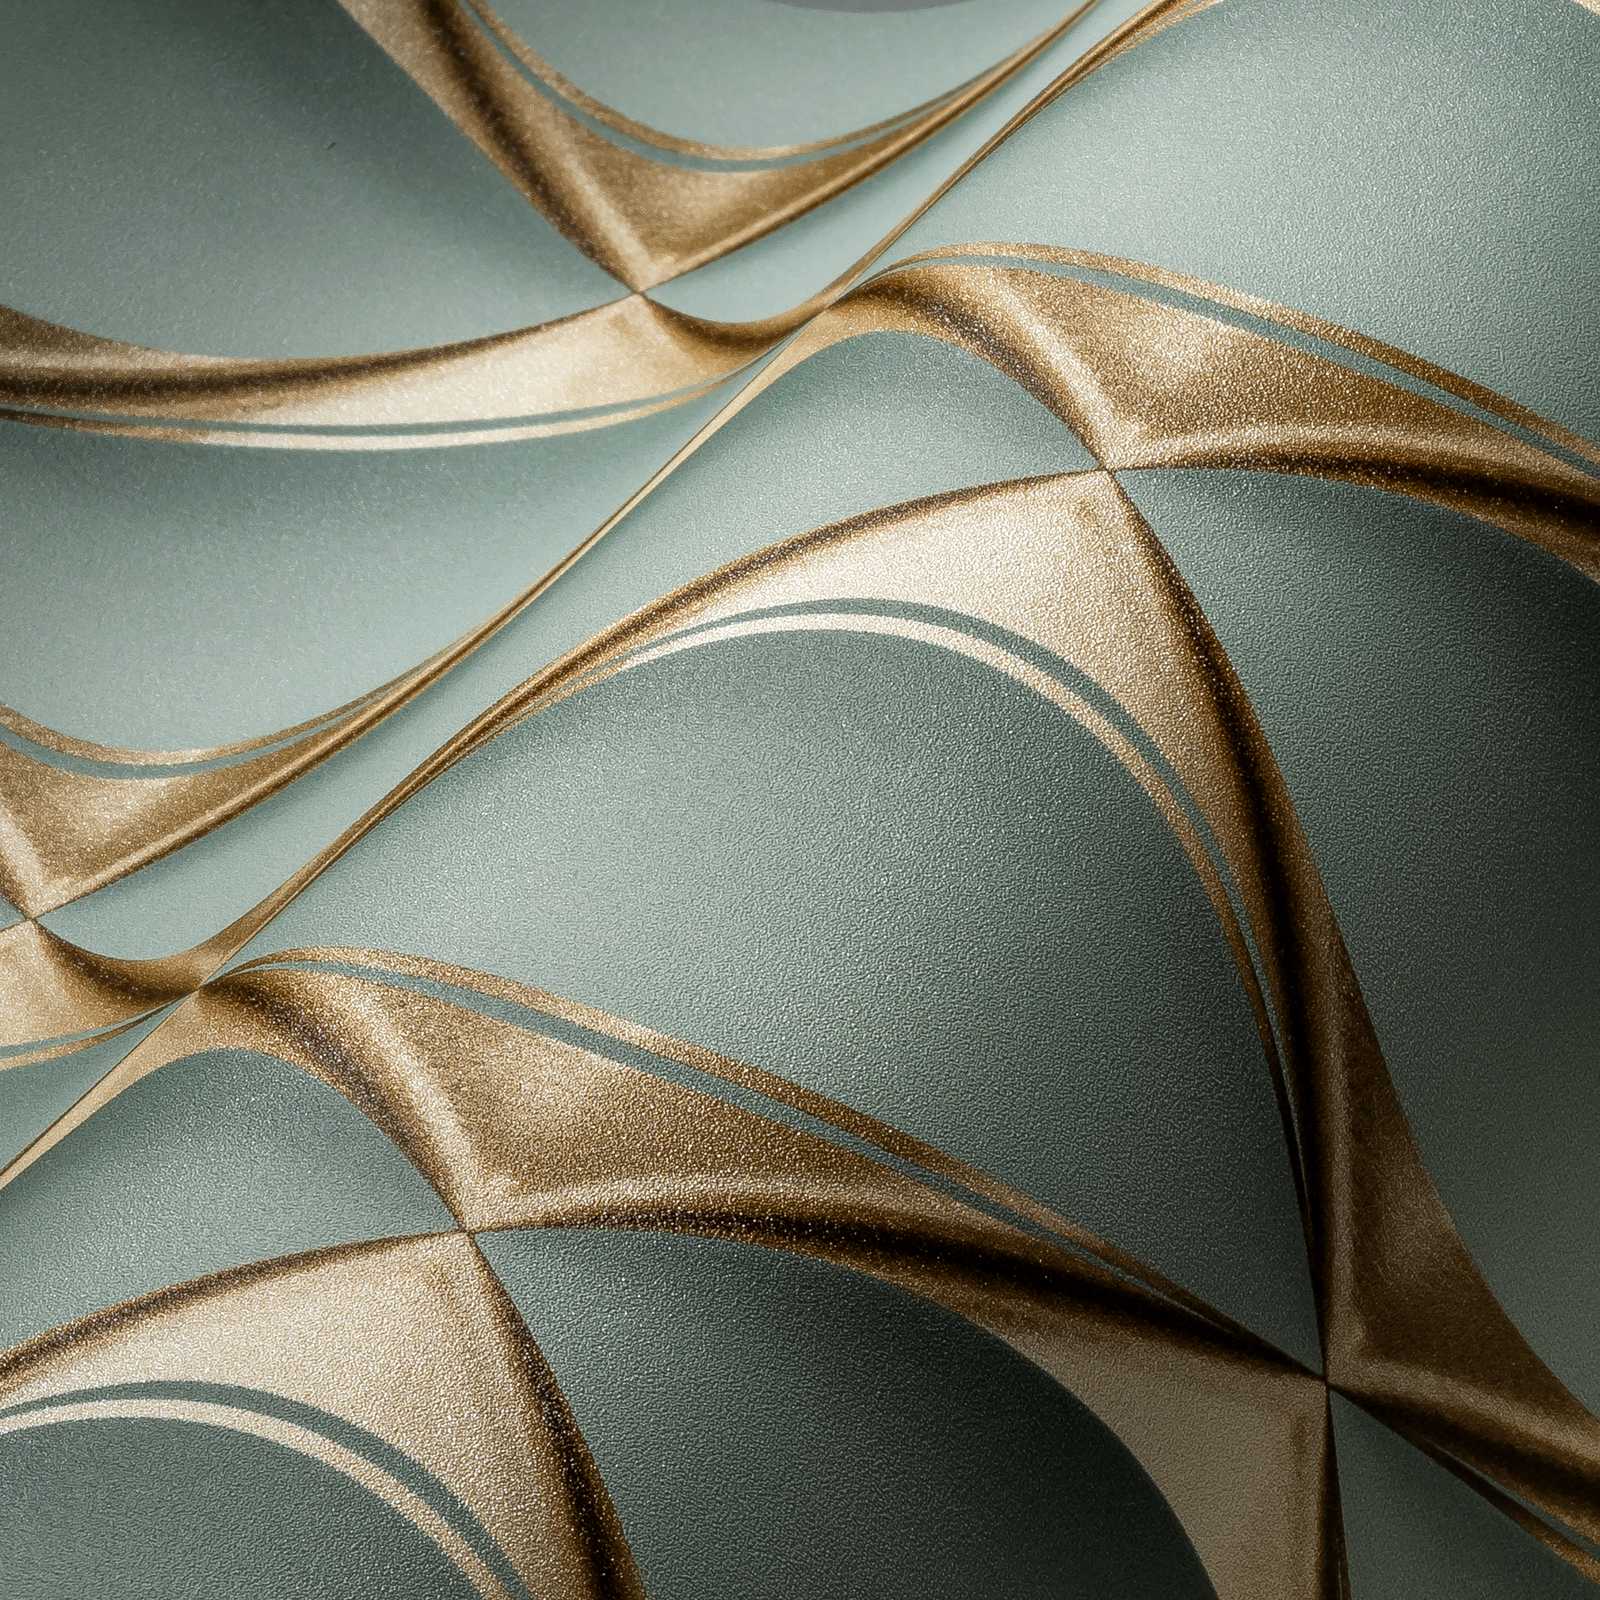             Papel pintado Diseño 3D con patrón de facetas metálicas - verde, metálico
        